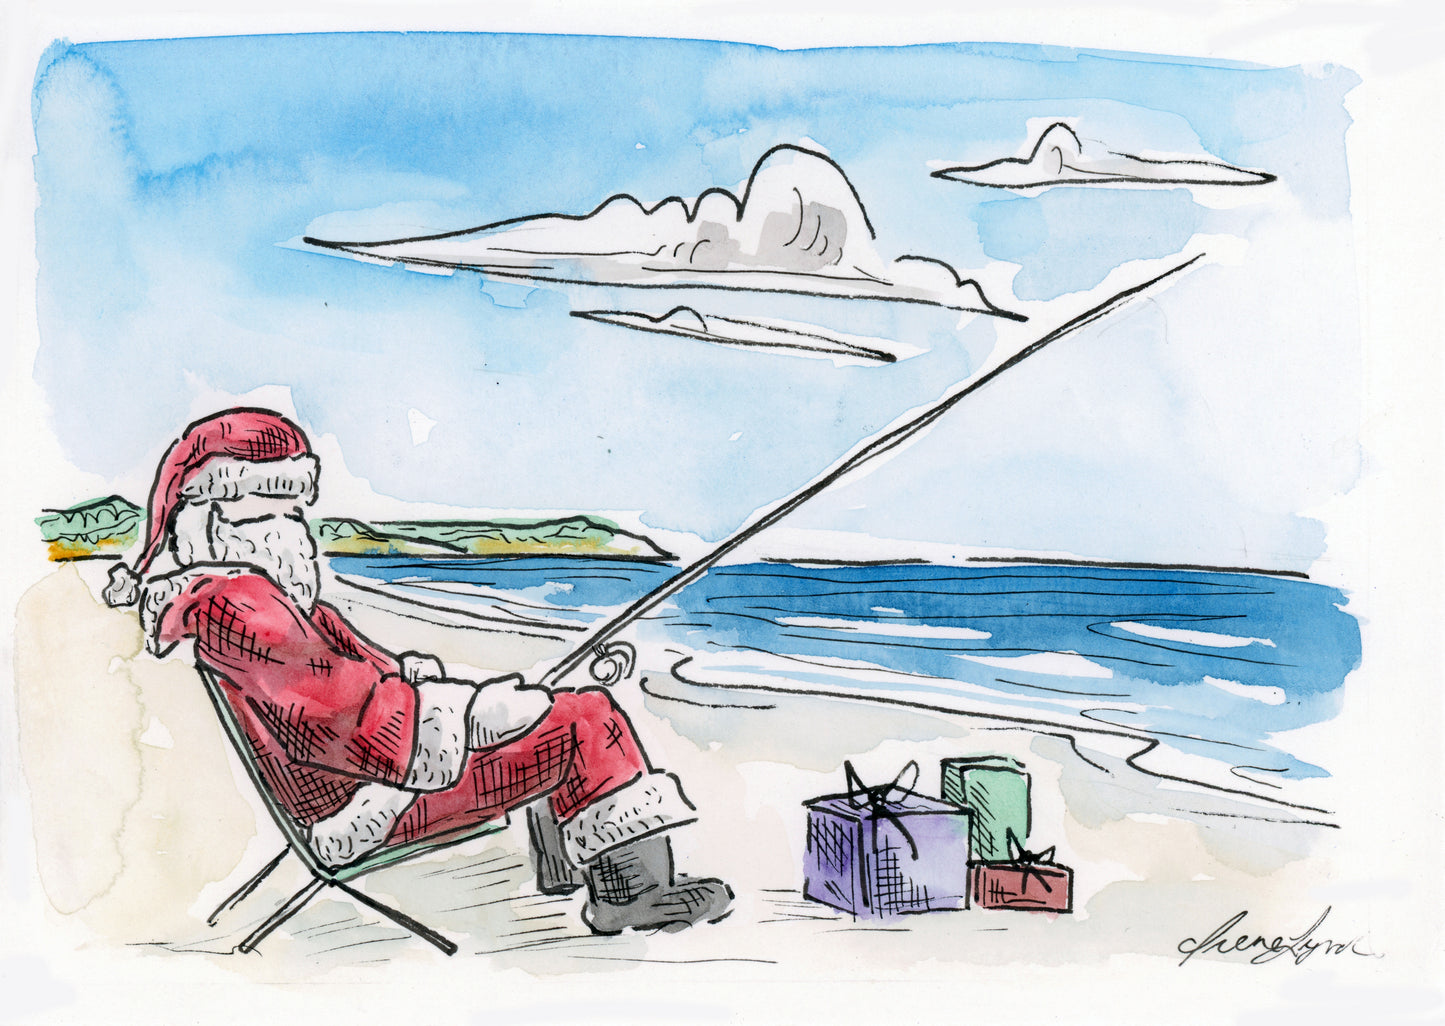 "Holidays on Cape Cod" Holiday Card Box Set